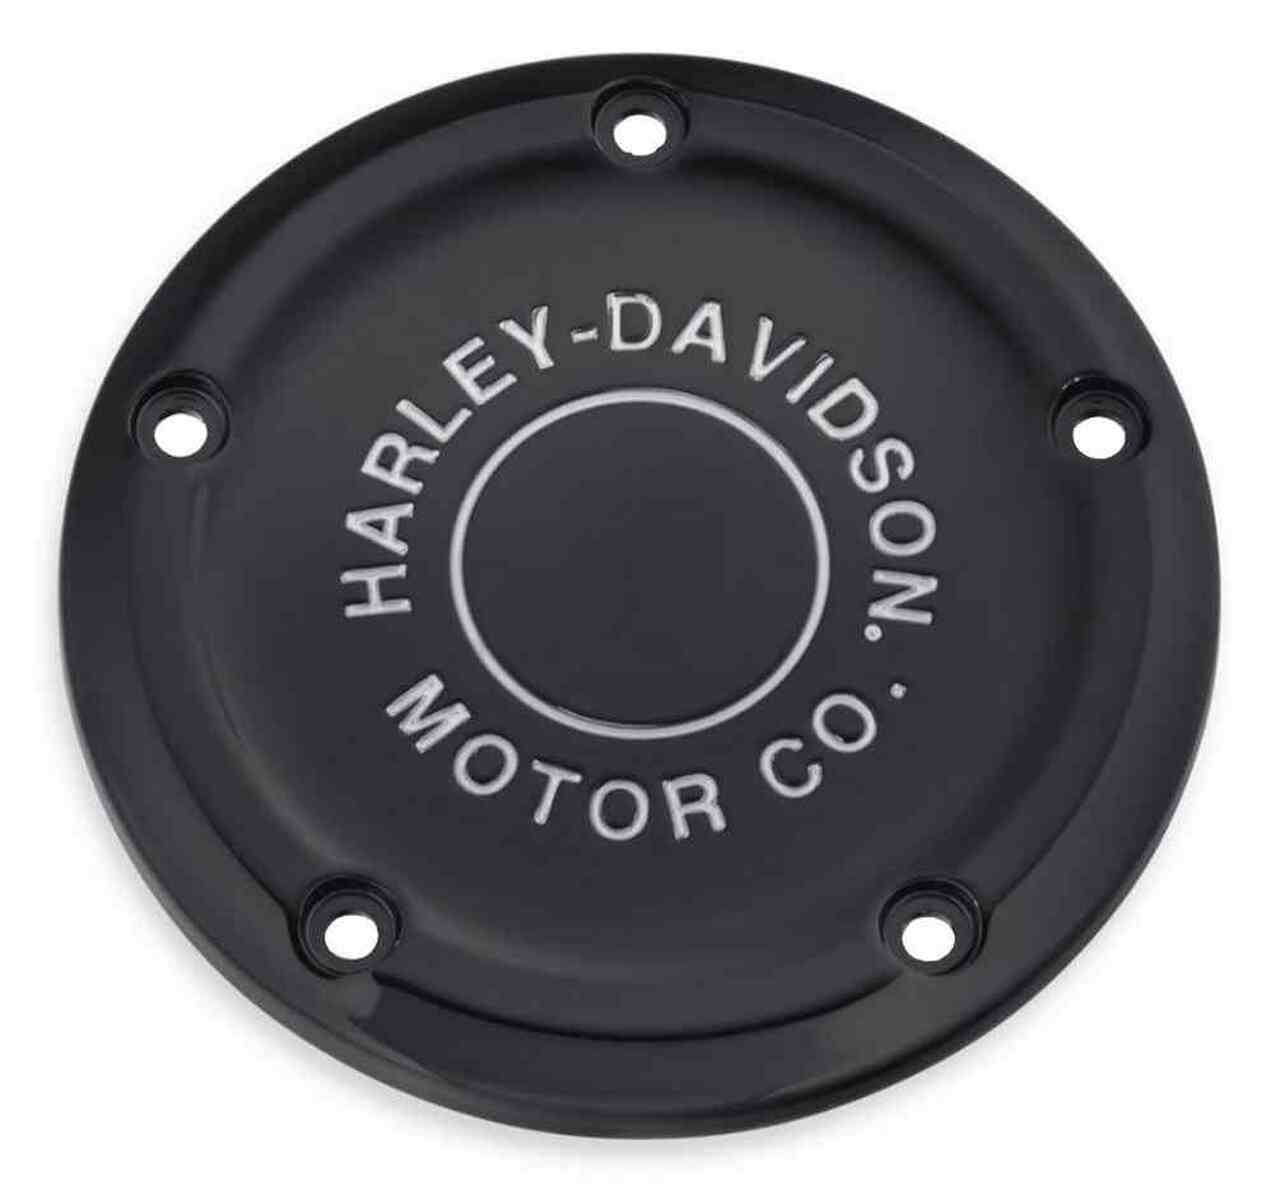 Harley-Davidson® Motor Co. Air Cleaner Trim